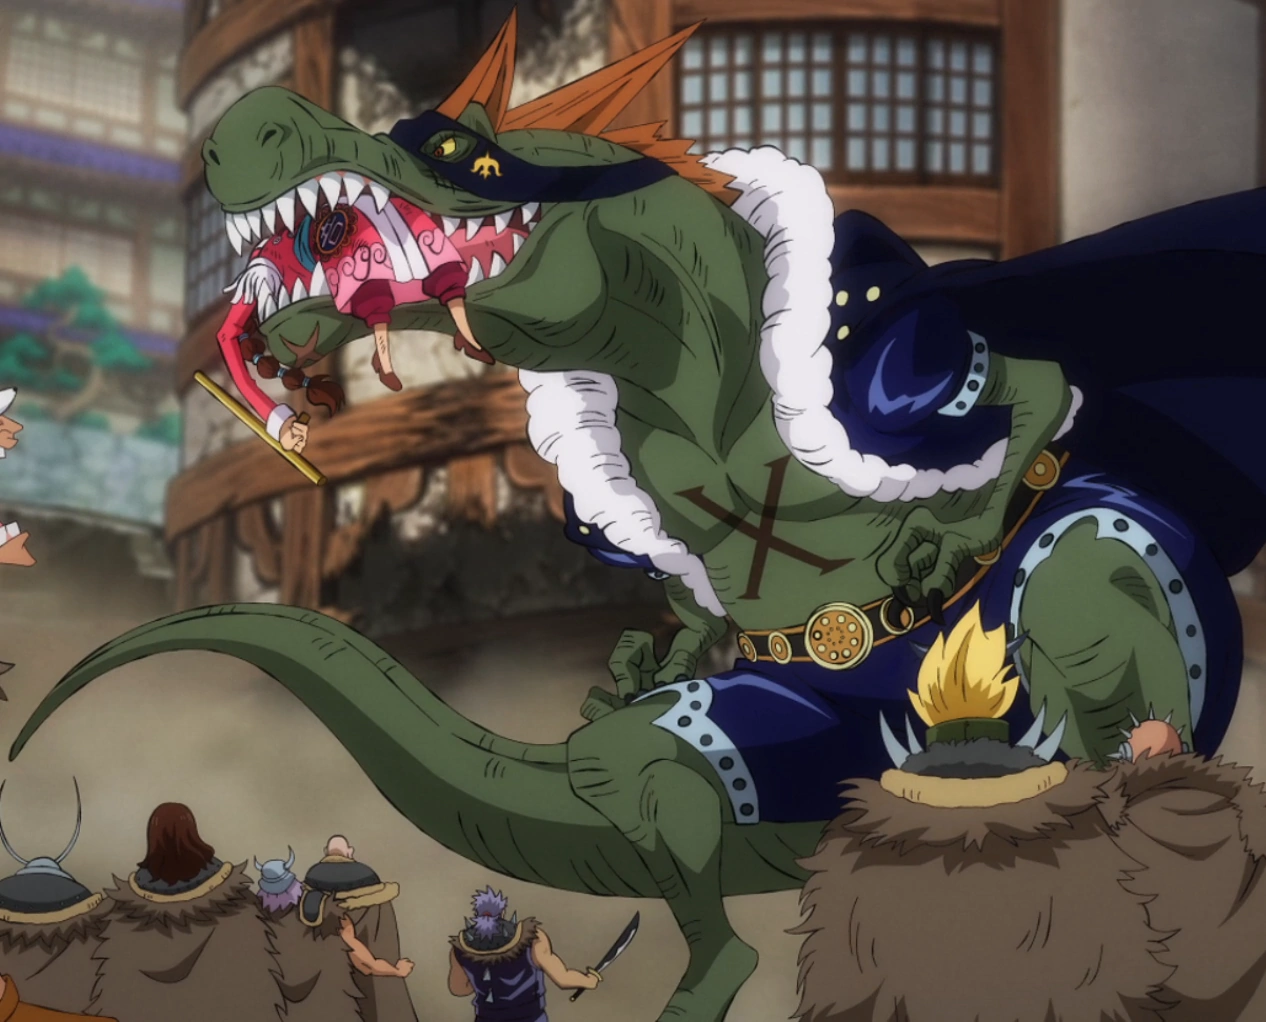 Ryu Ryu no Mi, Model: Allosaurus in One Piece